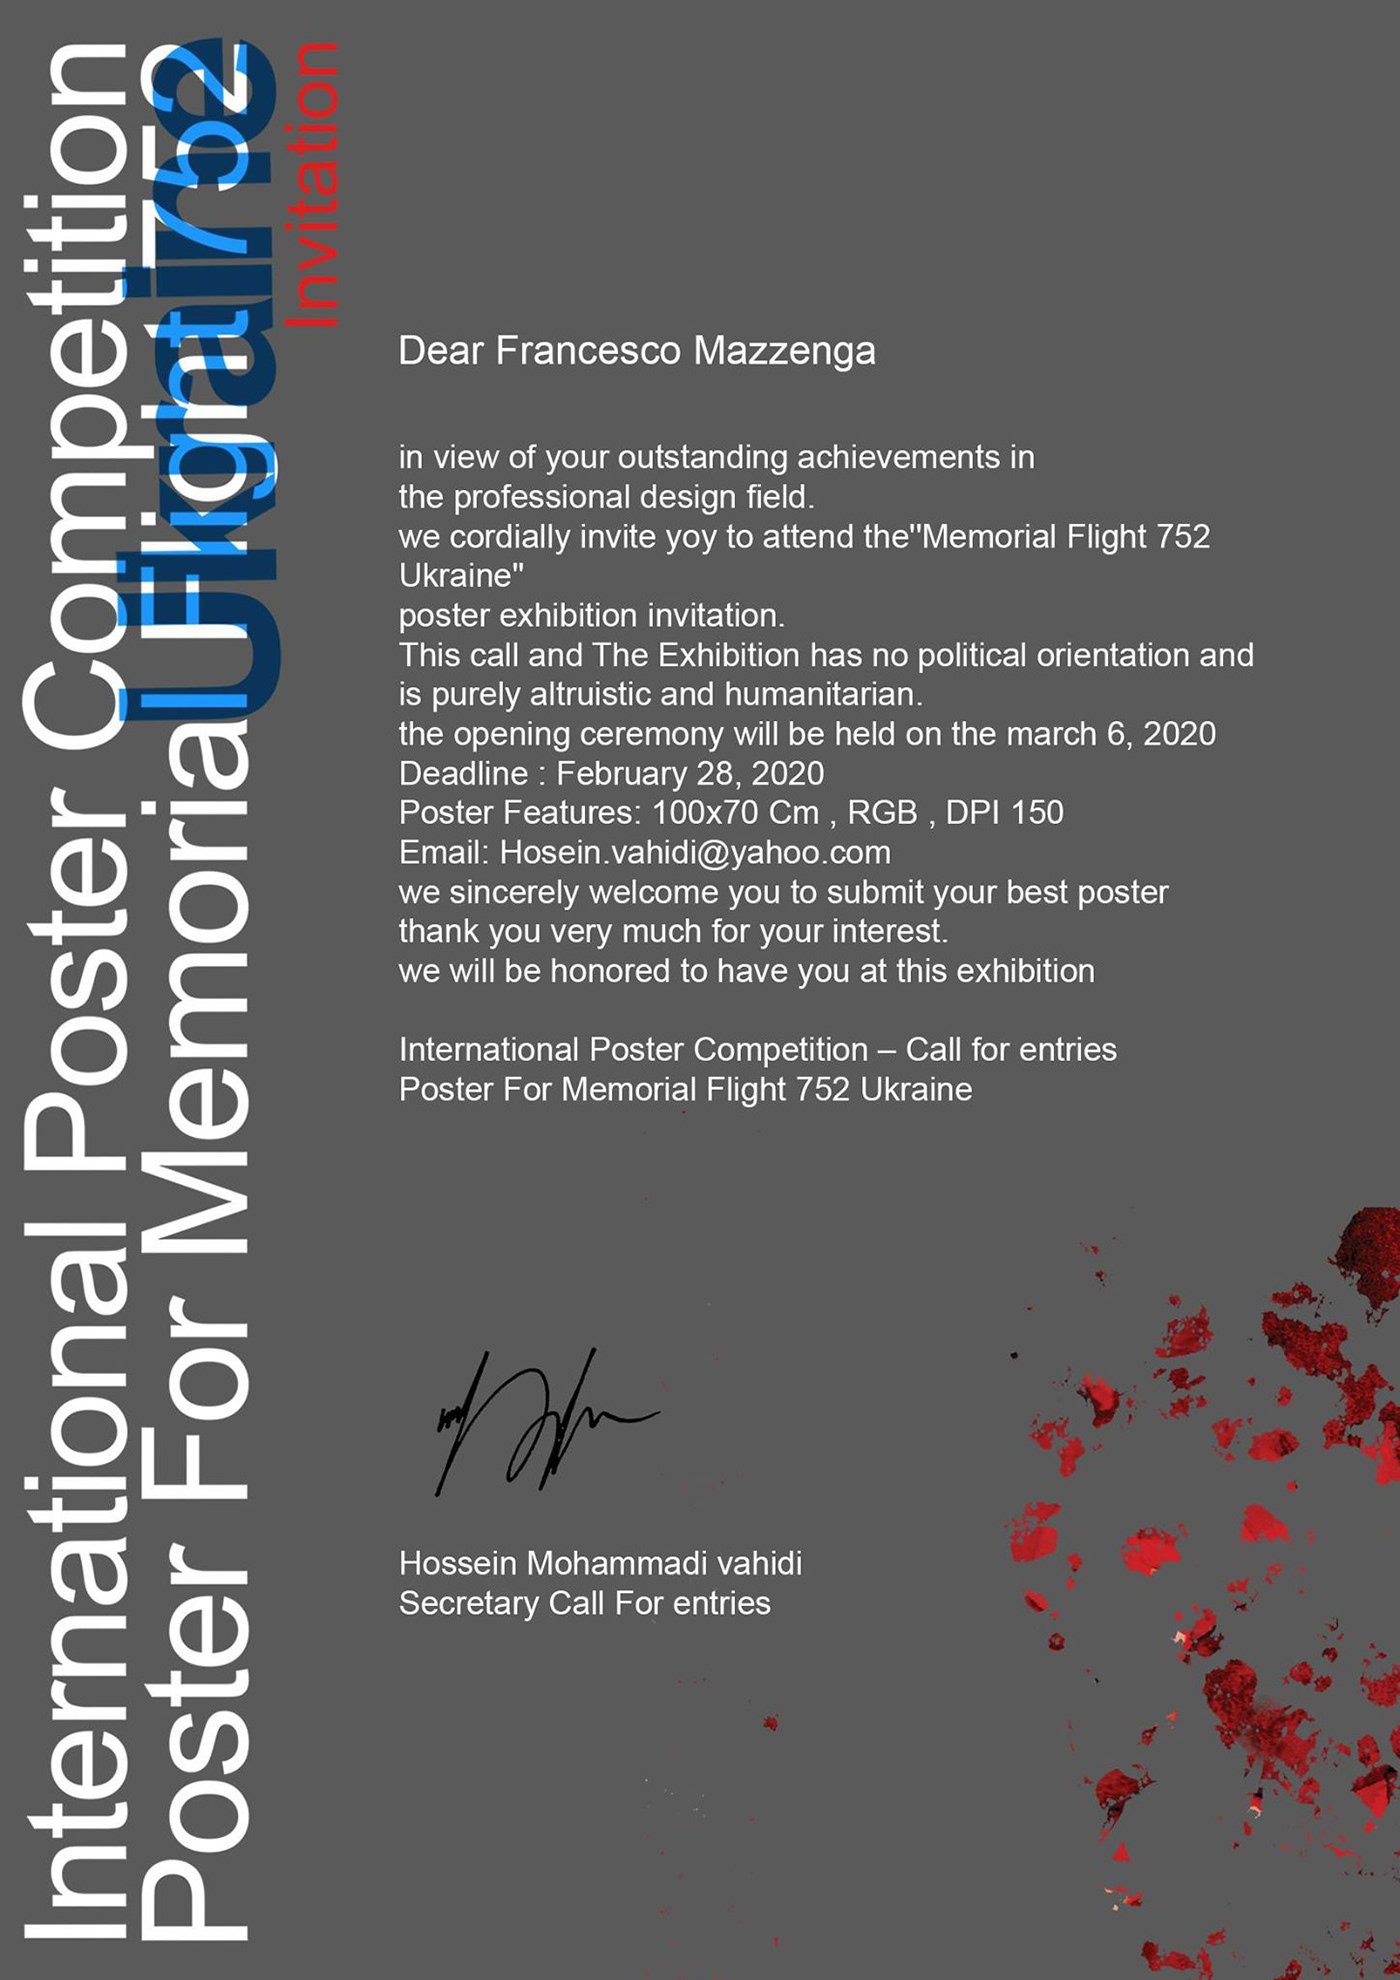 752 ukraine design flight Francesco Mazzenga poster posterdesign